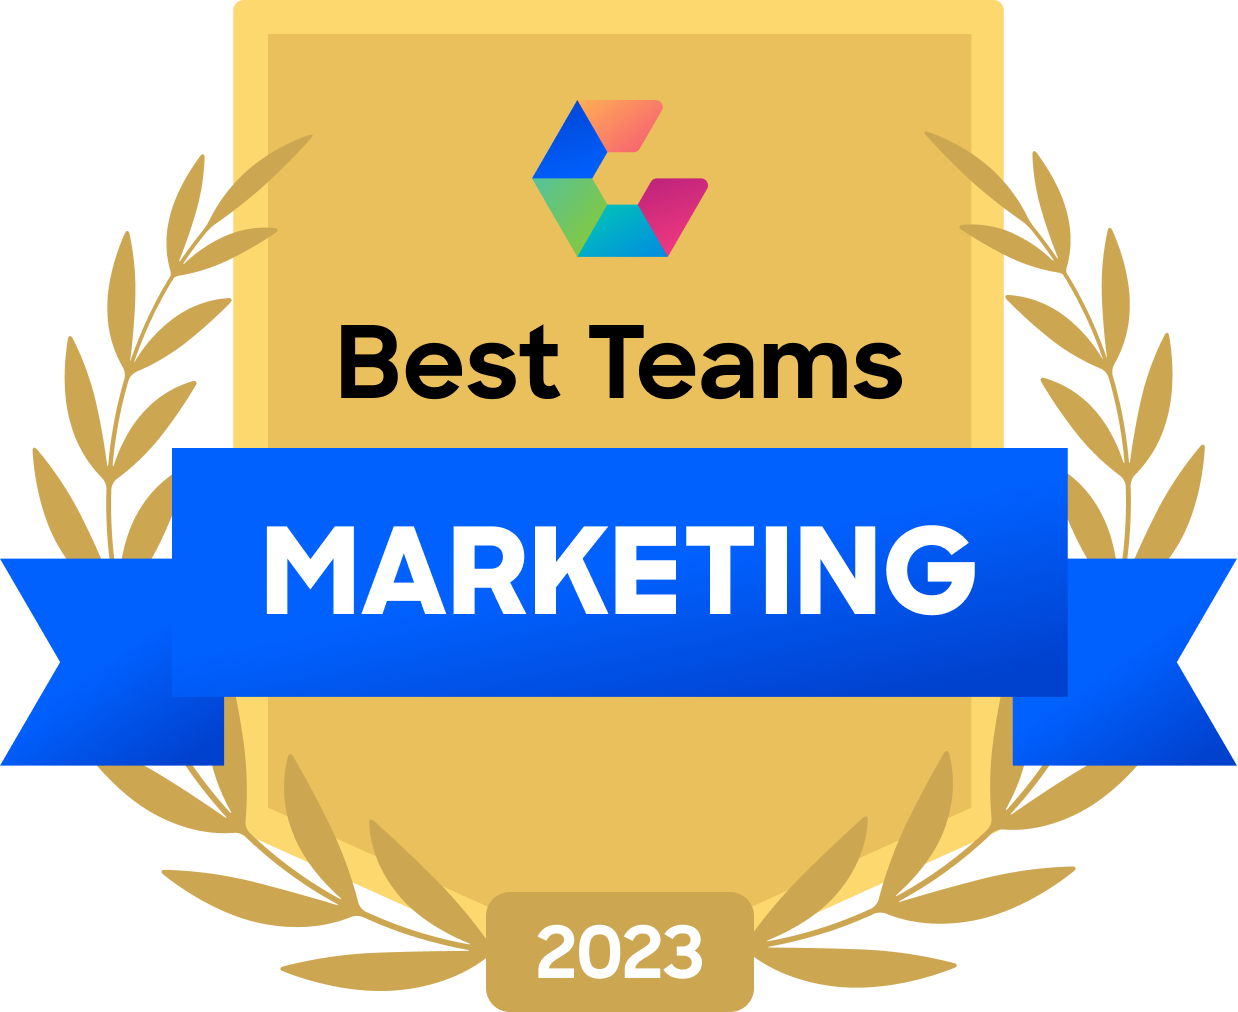 Best Teams Award for Marketing 2023 Smartsheet